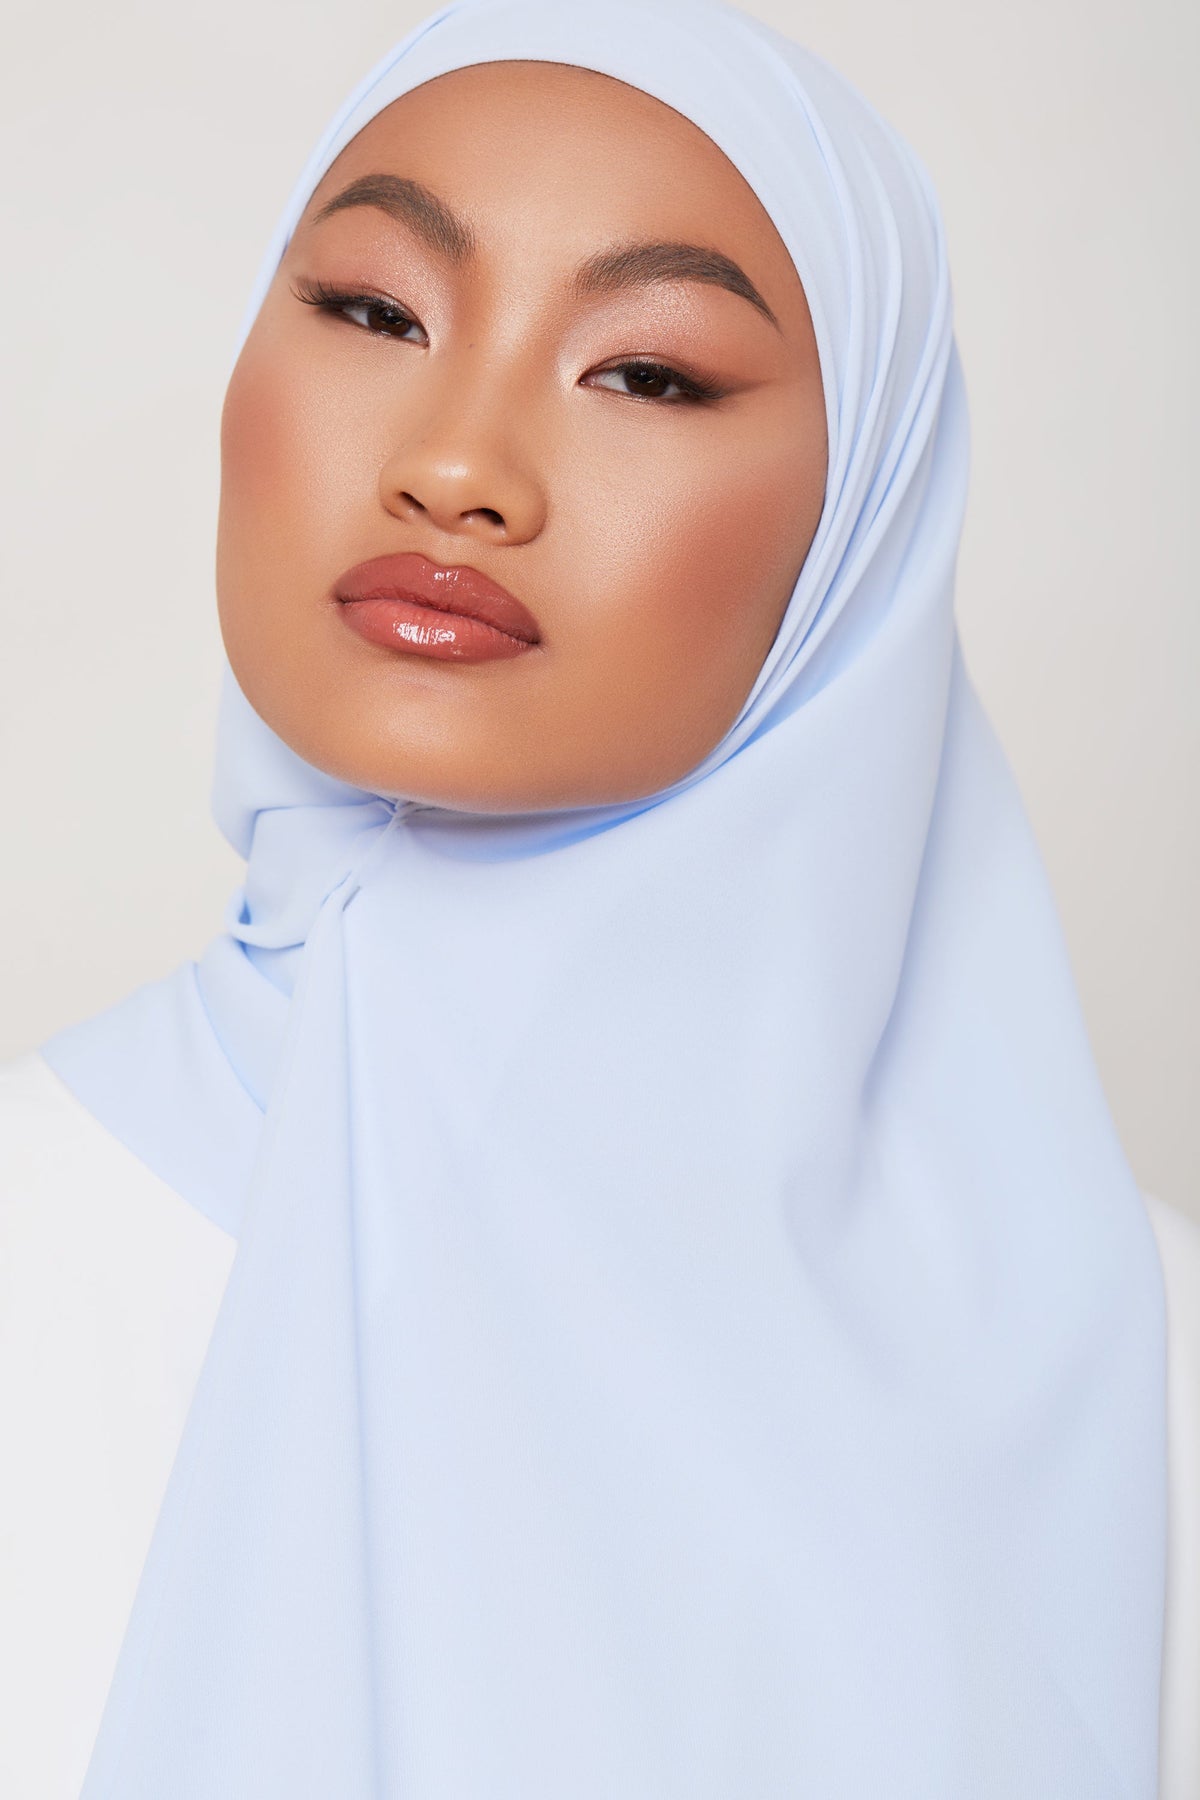 TEXTURE Classic Chiffon Hijab - Light Blue epschoolboard 